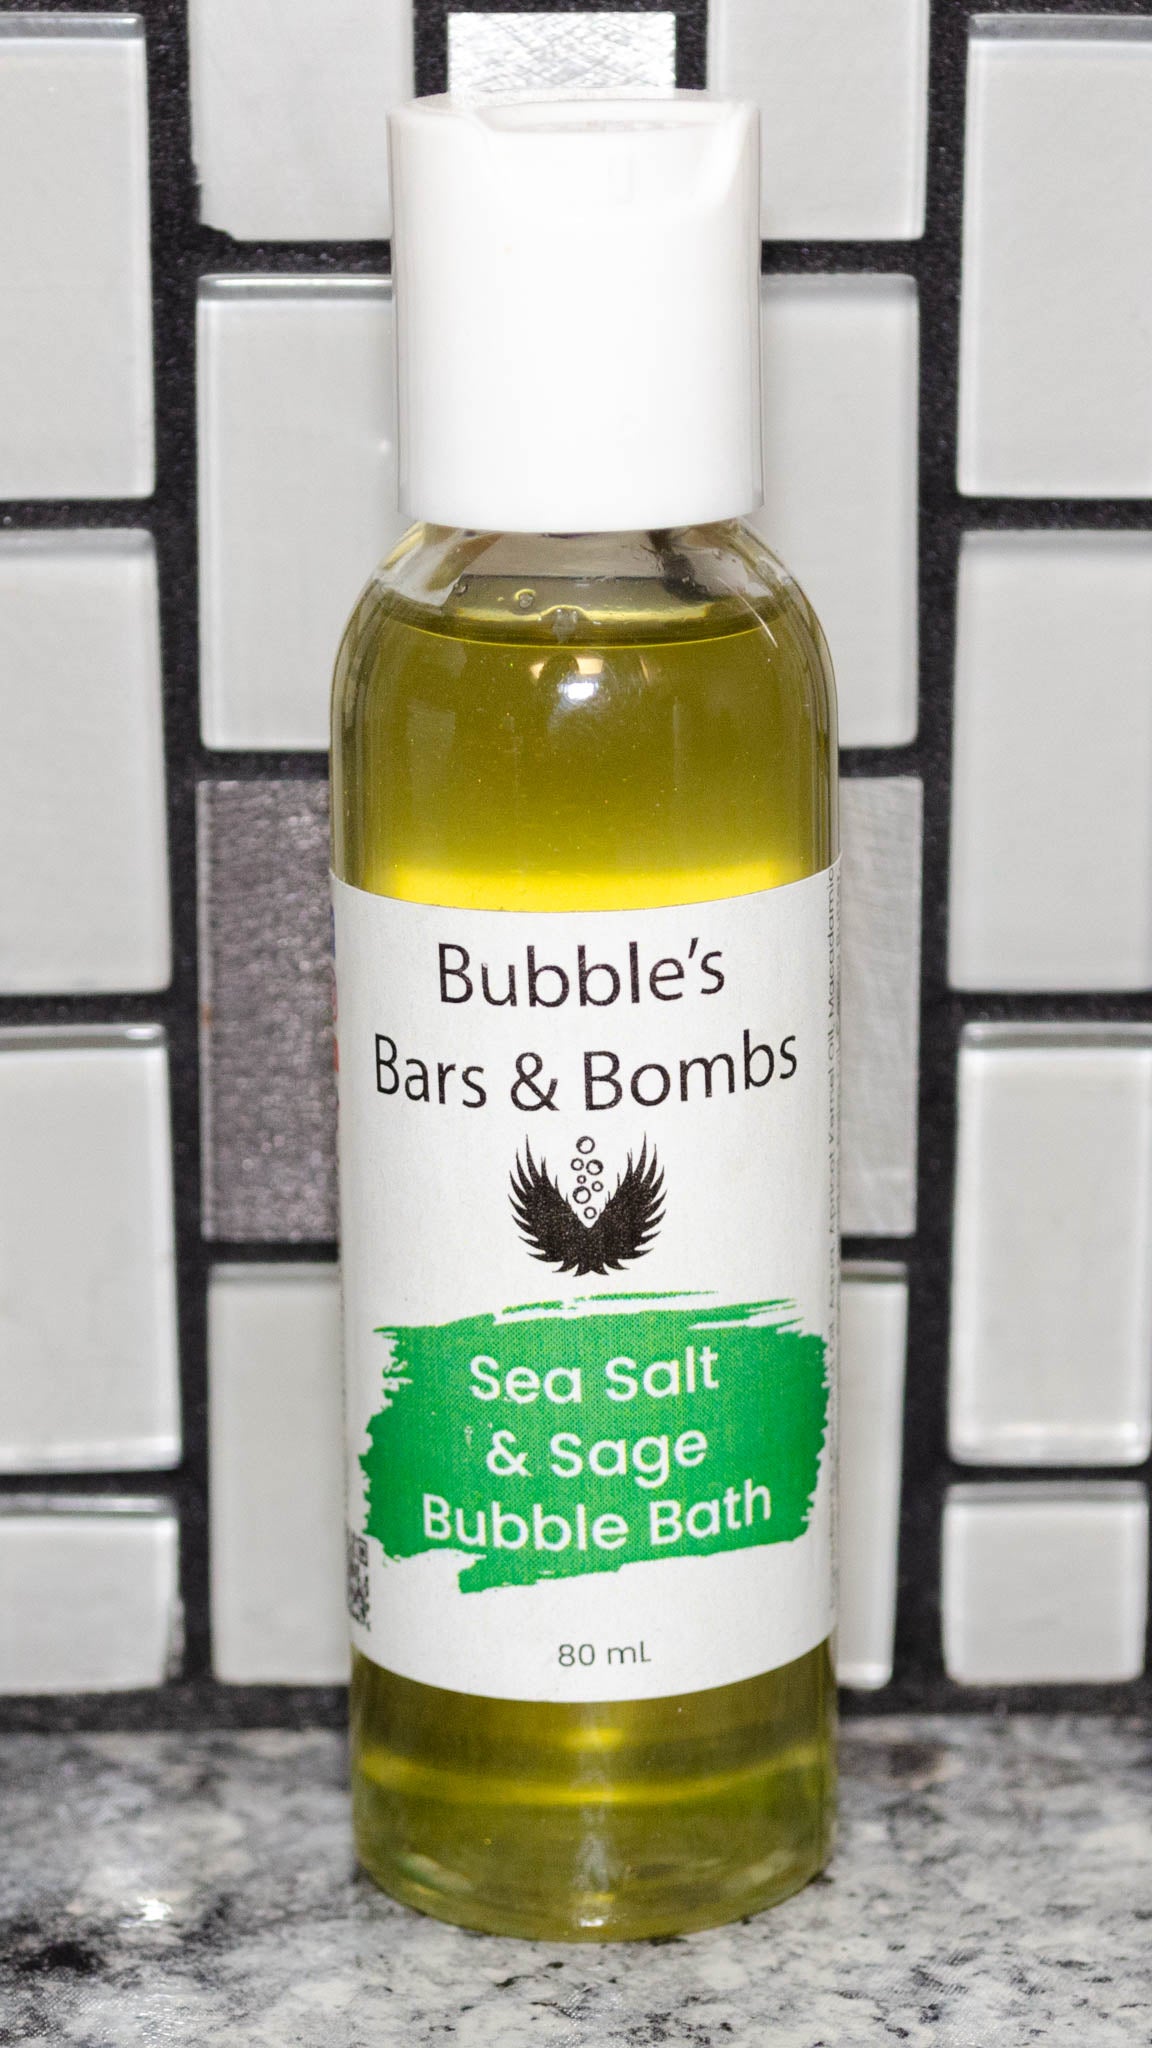 Sea Salt & Sage Bubble Bath